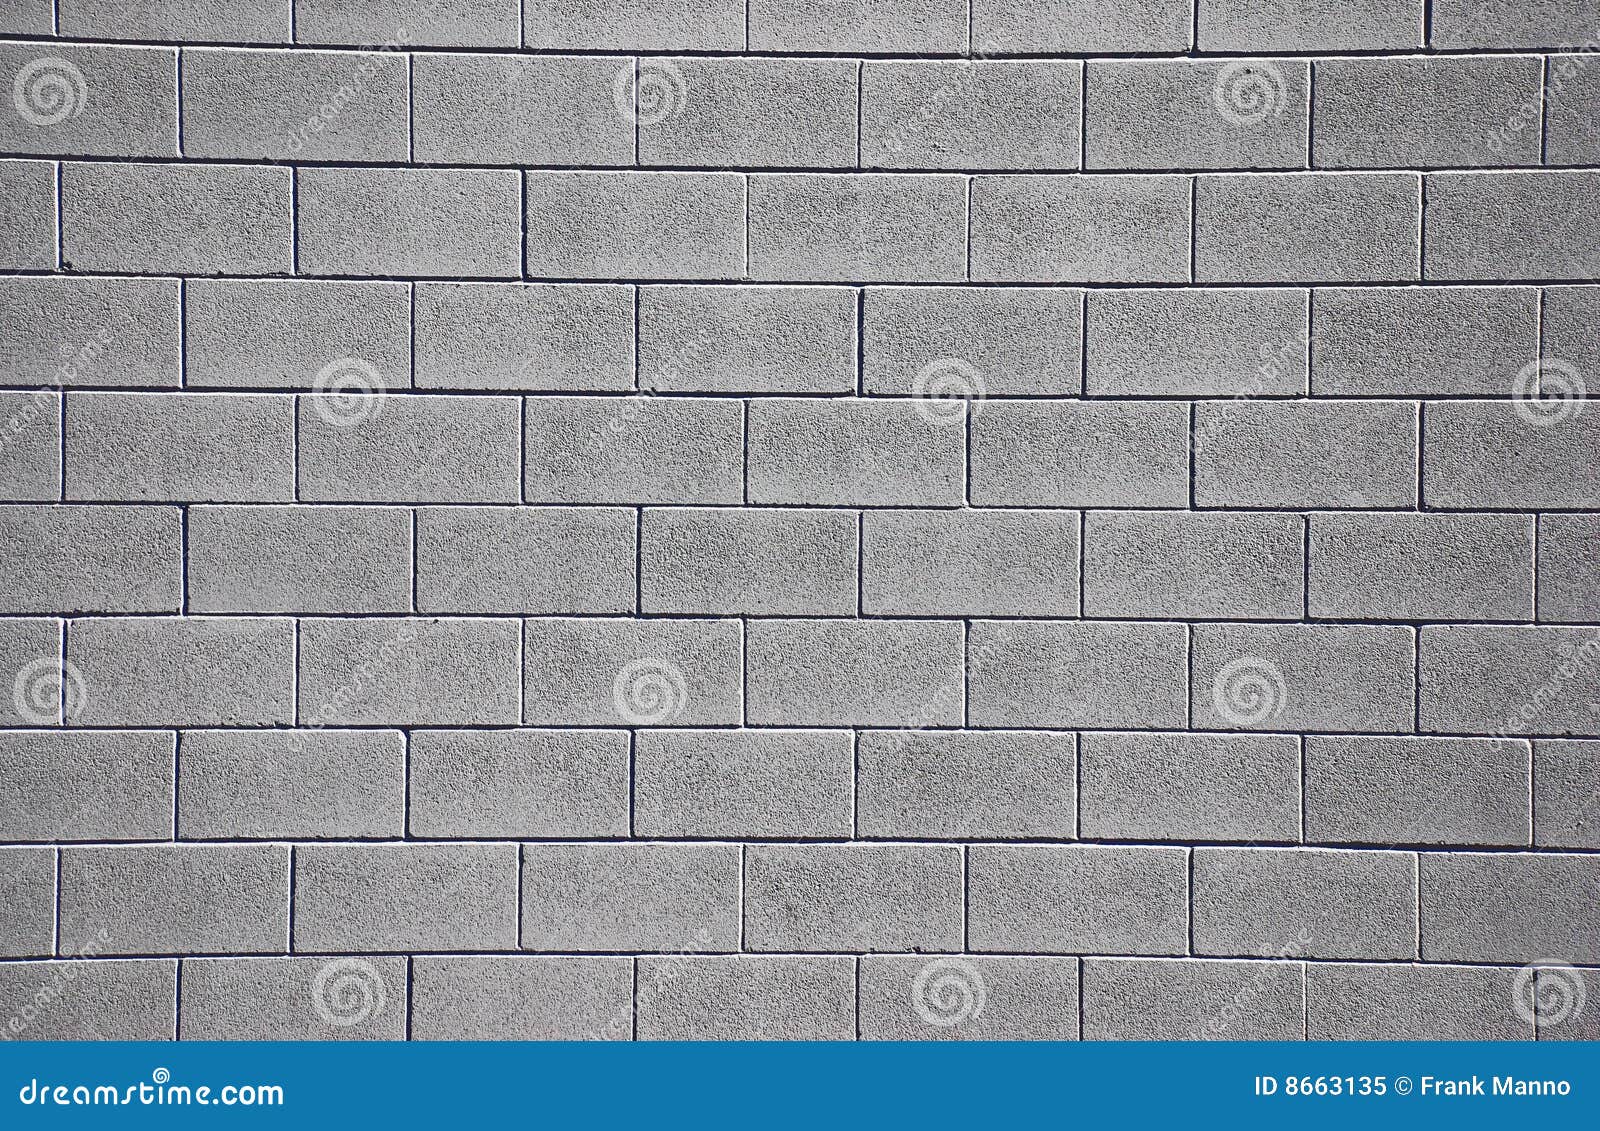 clean cinderblock wall